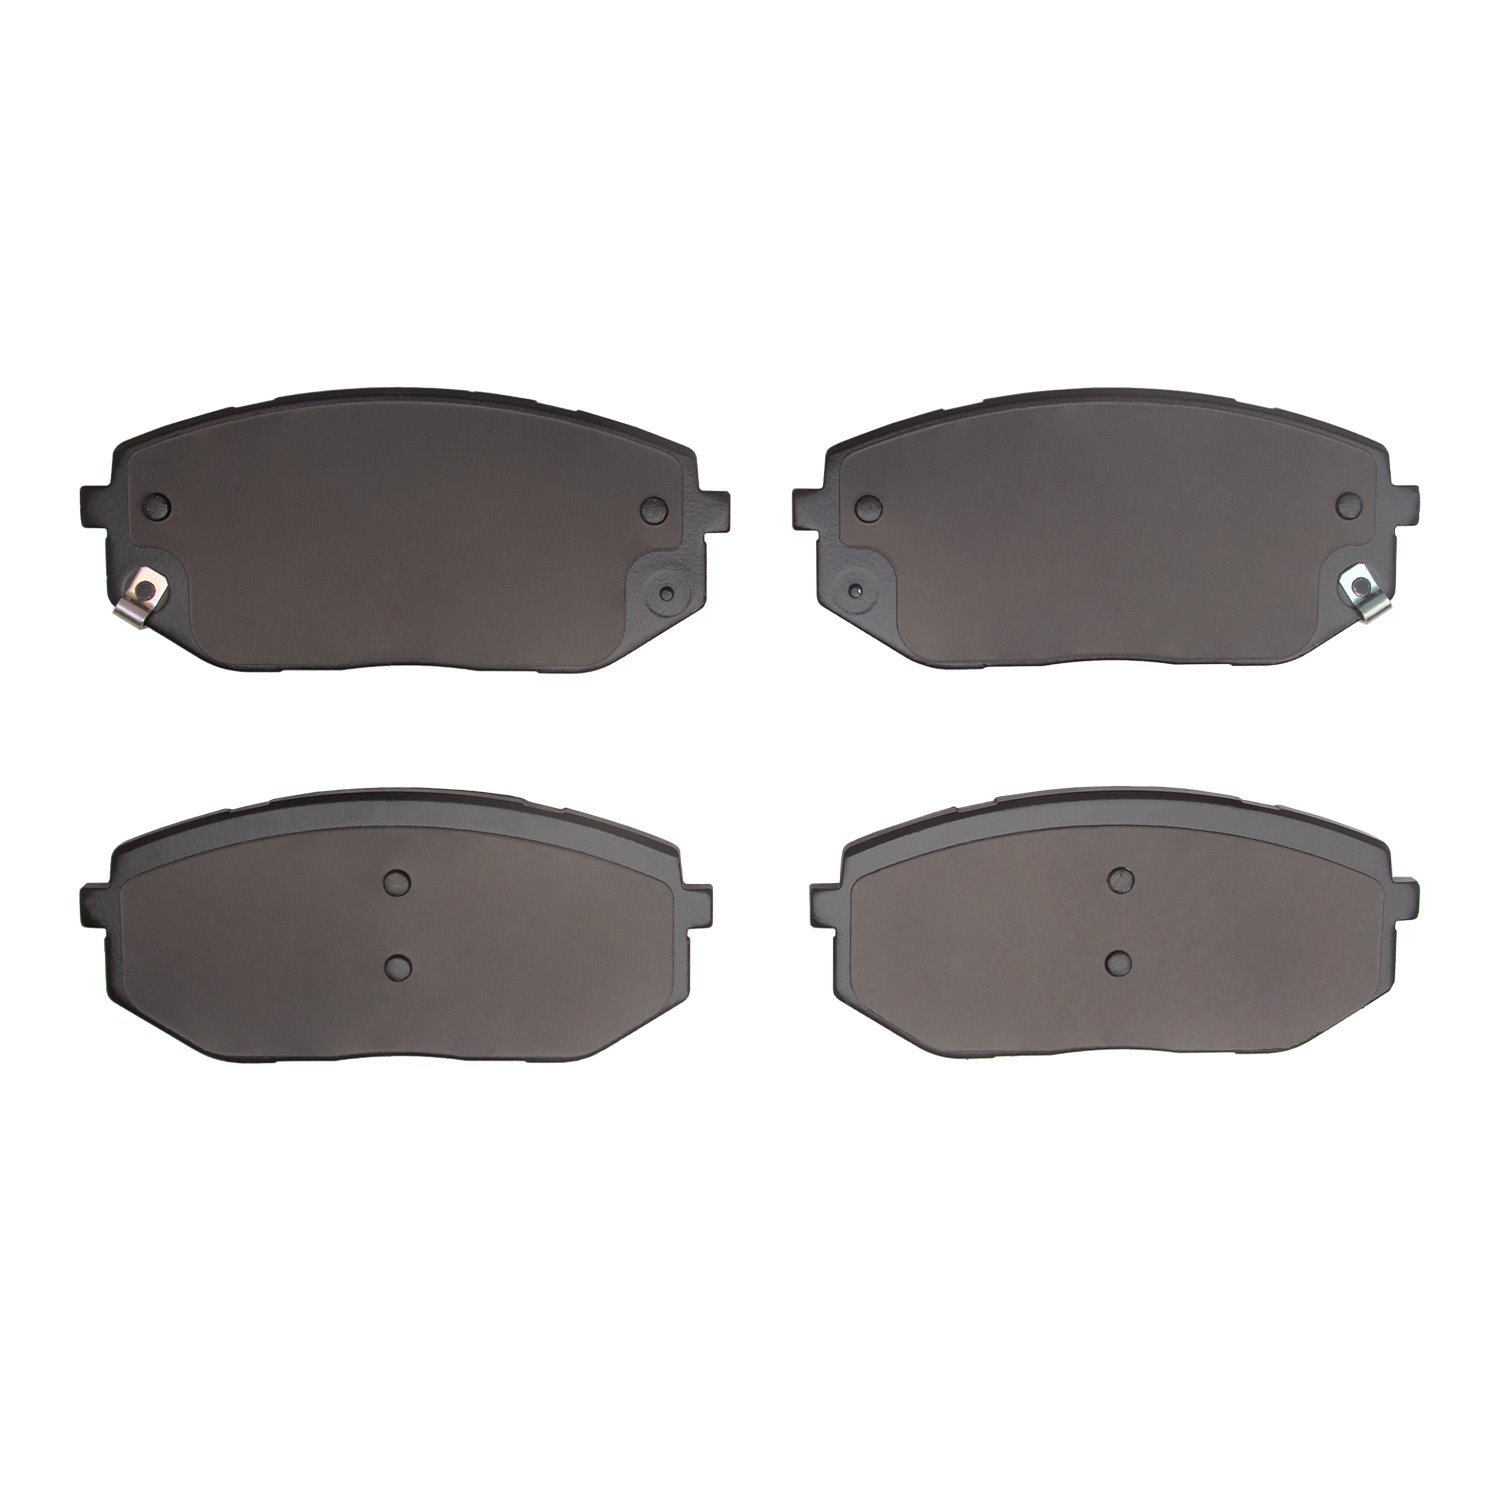 1551-2398-00 5000 Advanced Ceramic Brake Pads, Fits Select Kia/Hyundai/Genesis, Position: Front